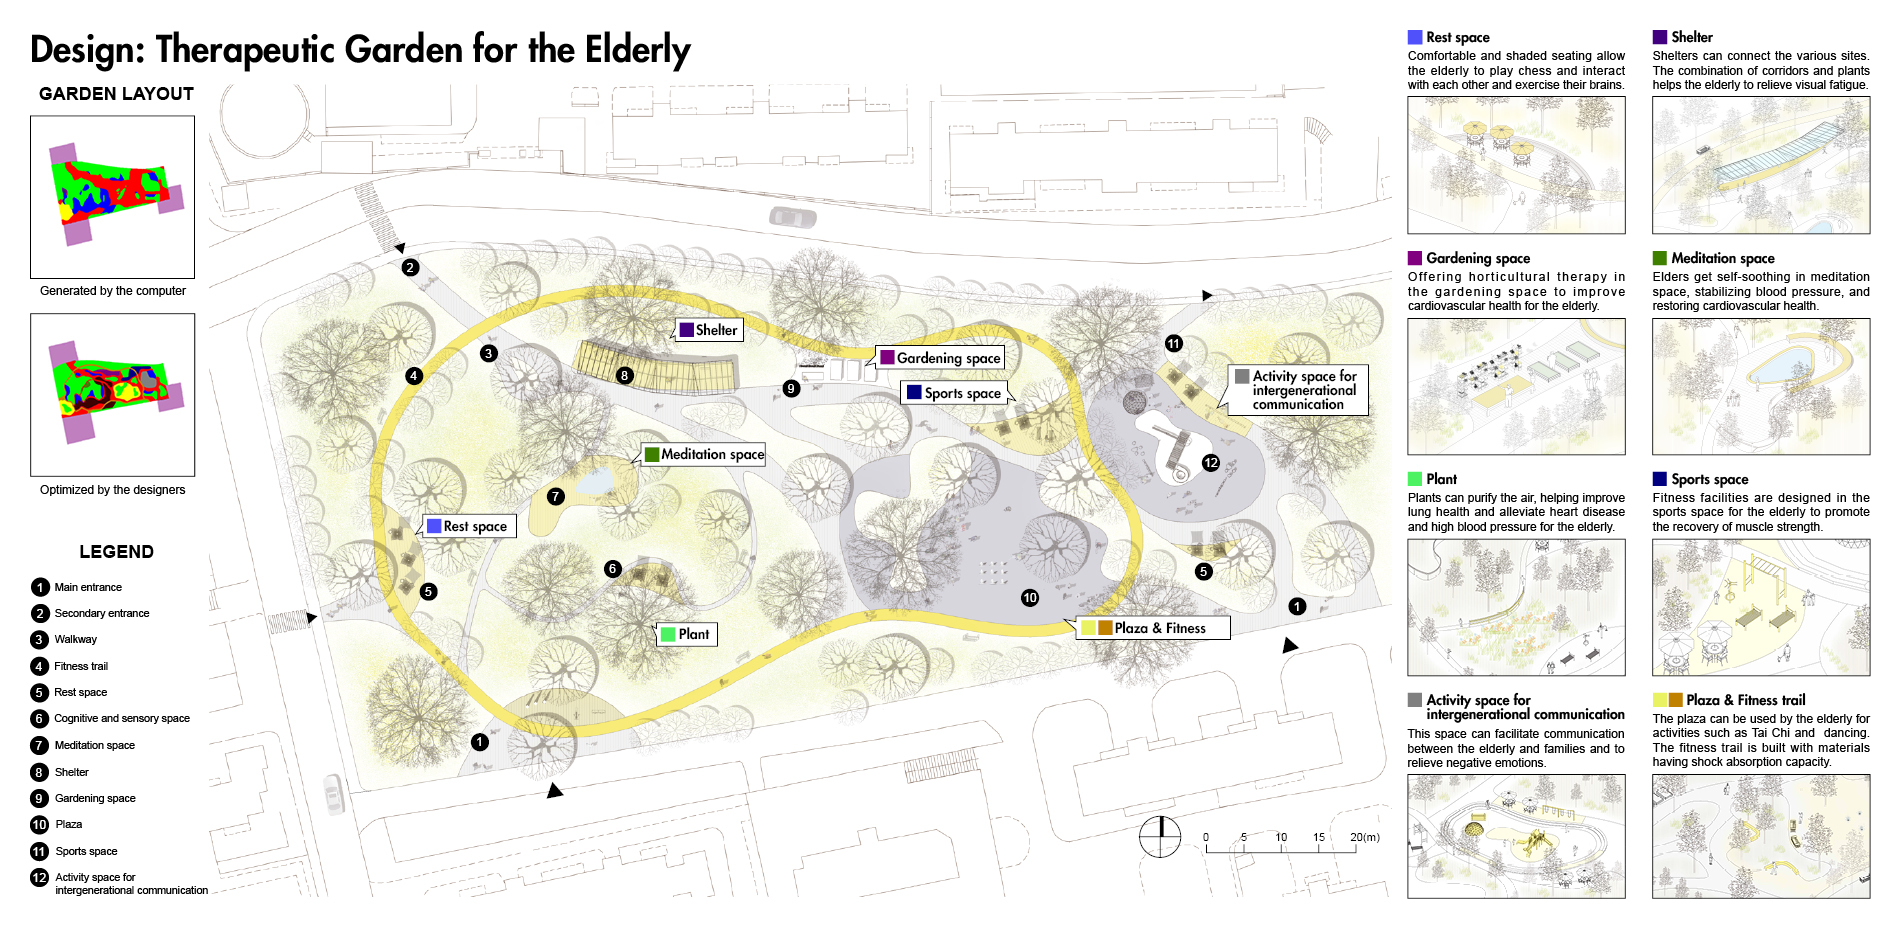 Design: Therapeutic Garden for the Elderly